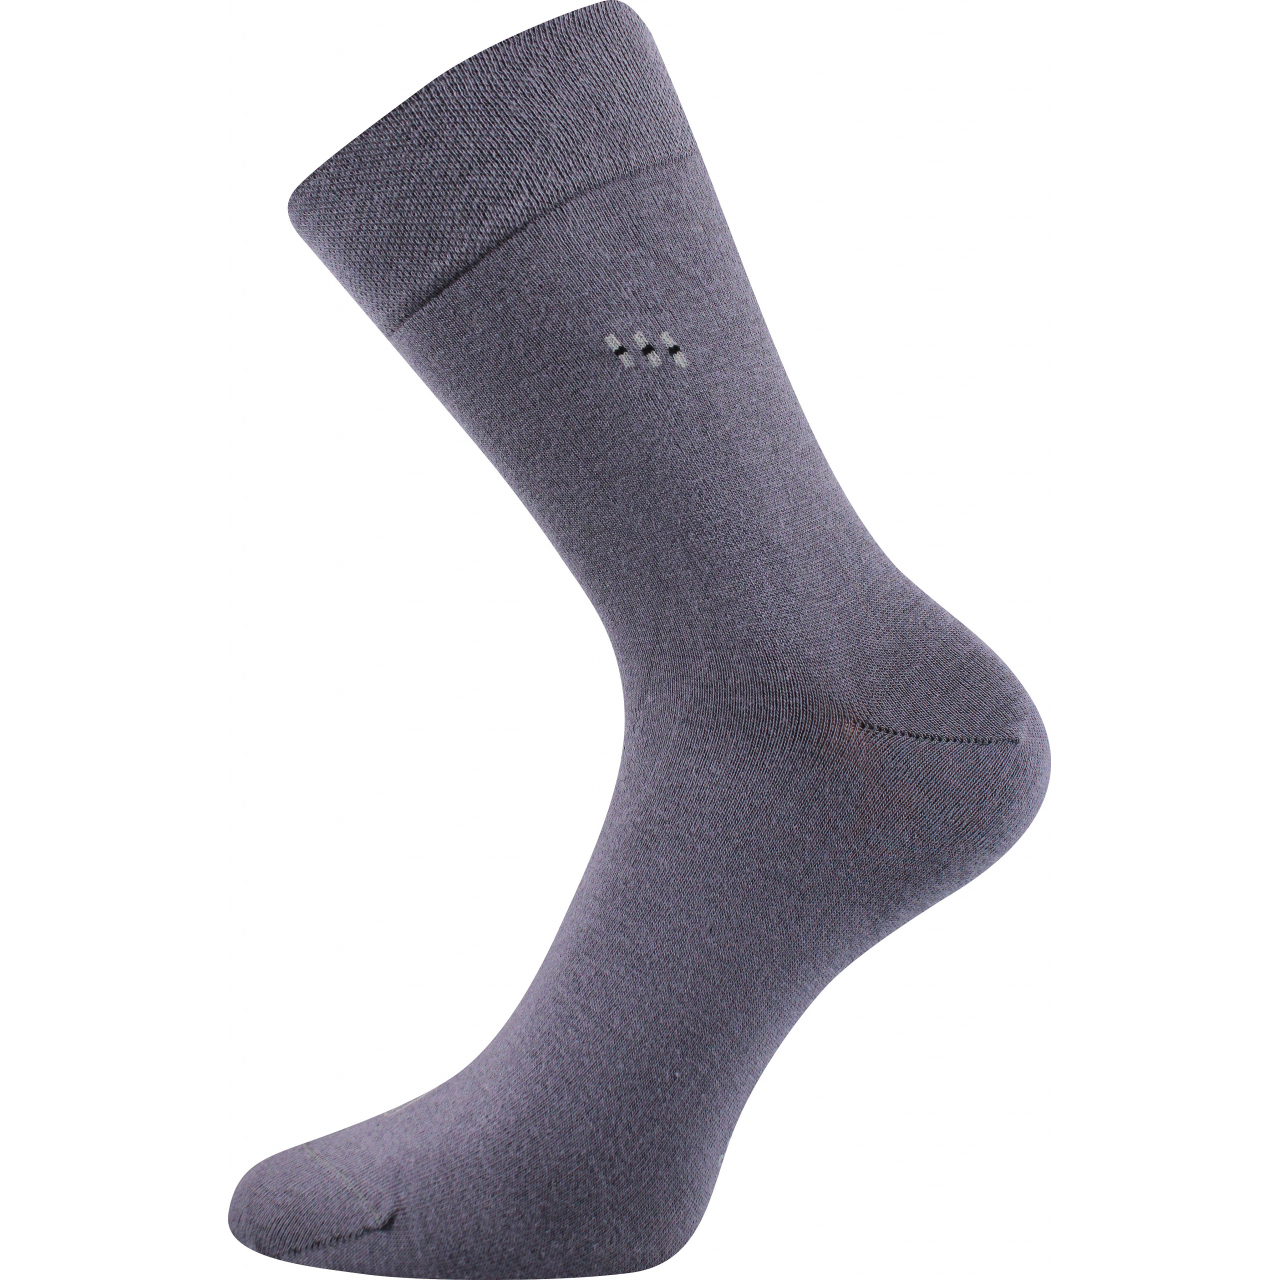 Ponožky pánské společenské Lonka Dipool - šedé, 43-46